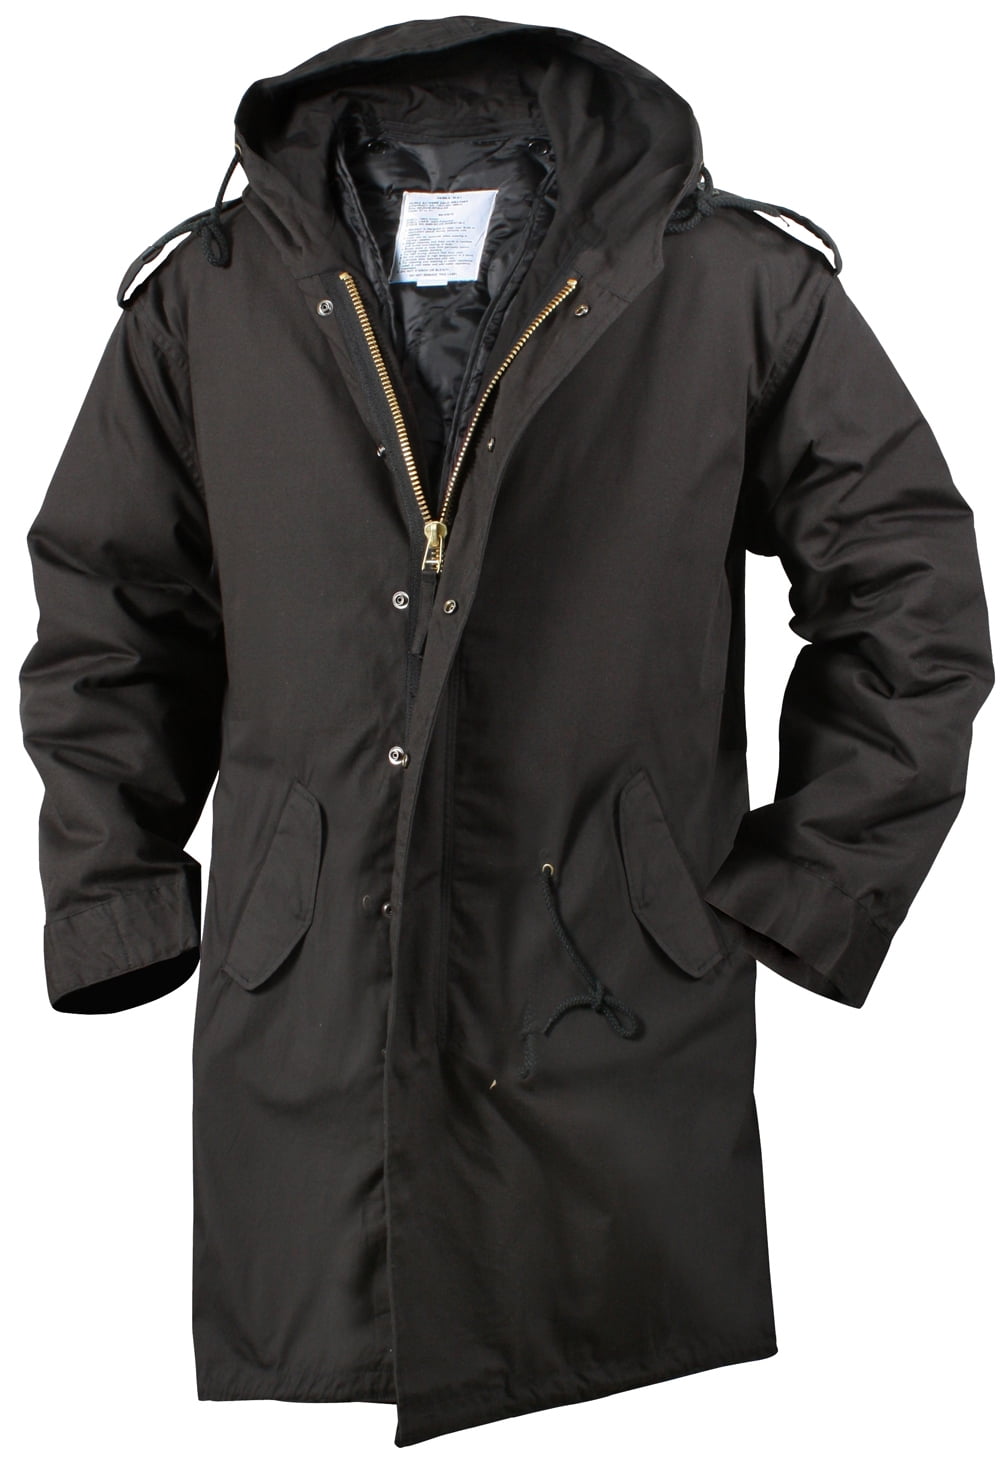 LEVI'S Water Resistant Lightweight Hooded Raincoat Jacket Black $185 M -